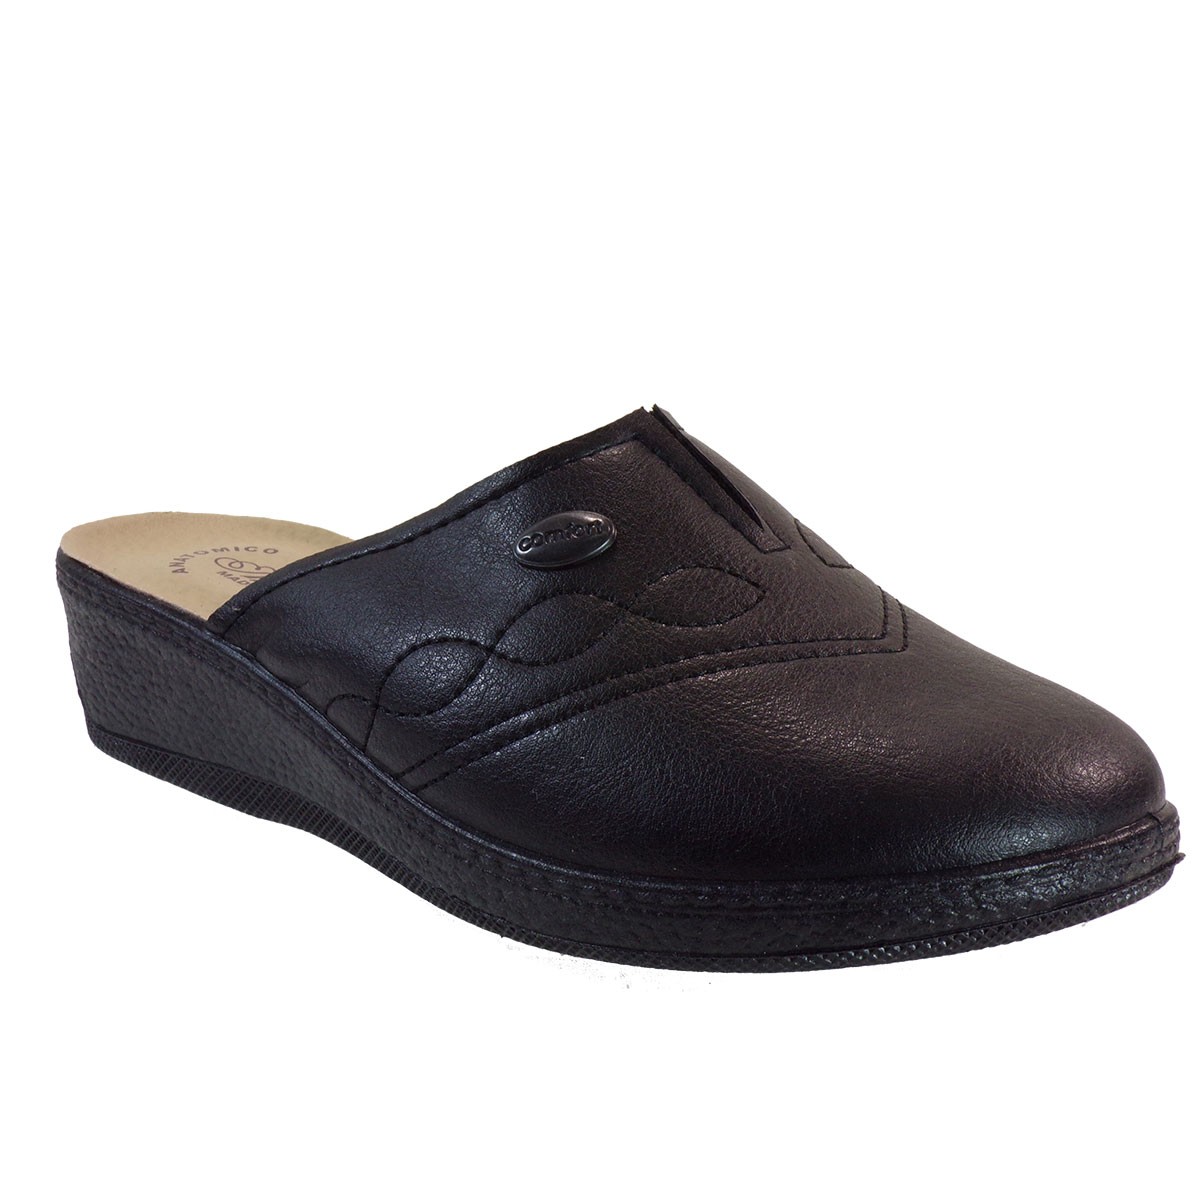 Bagiota Shoes Γυναικείες Παντόφλες 4012 Μαύρο bagiotashoes 4012 mauro